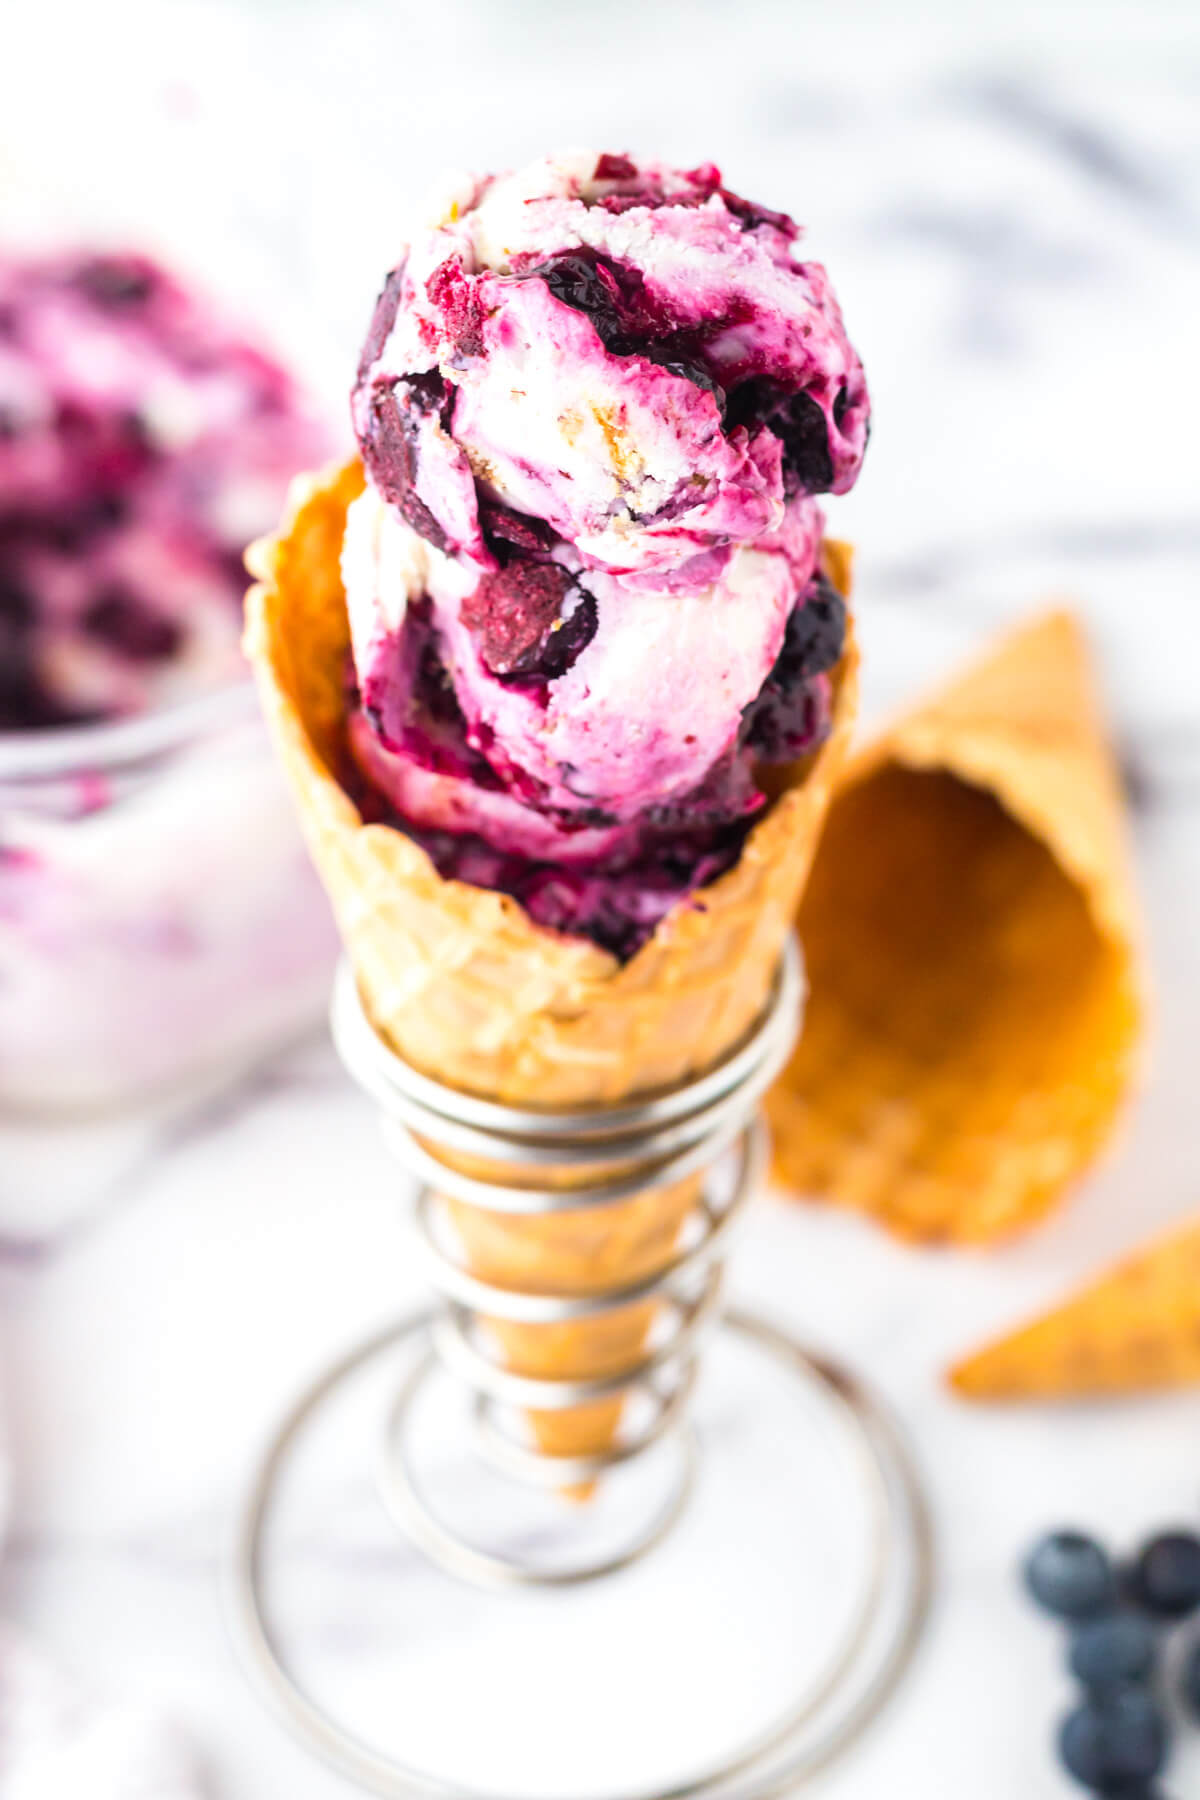 An ice cream cone holding a scoop of vibrant purple Blueberry Cheesecake Ice Cream.